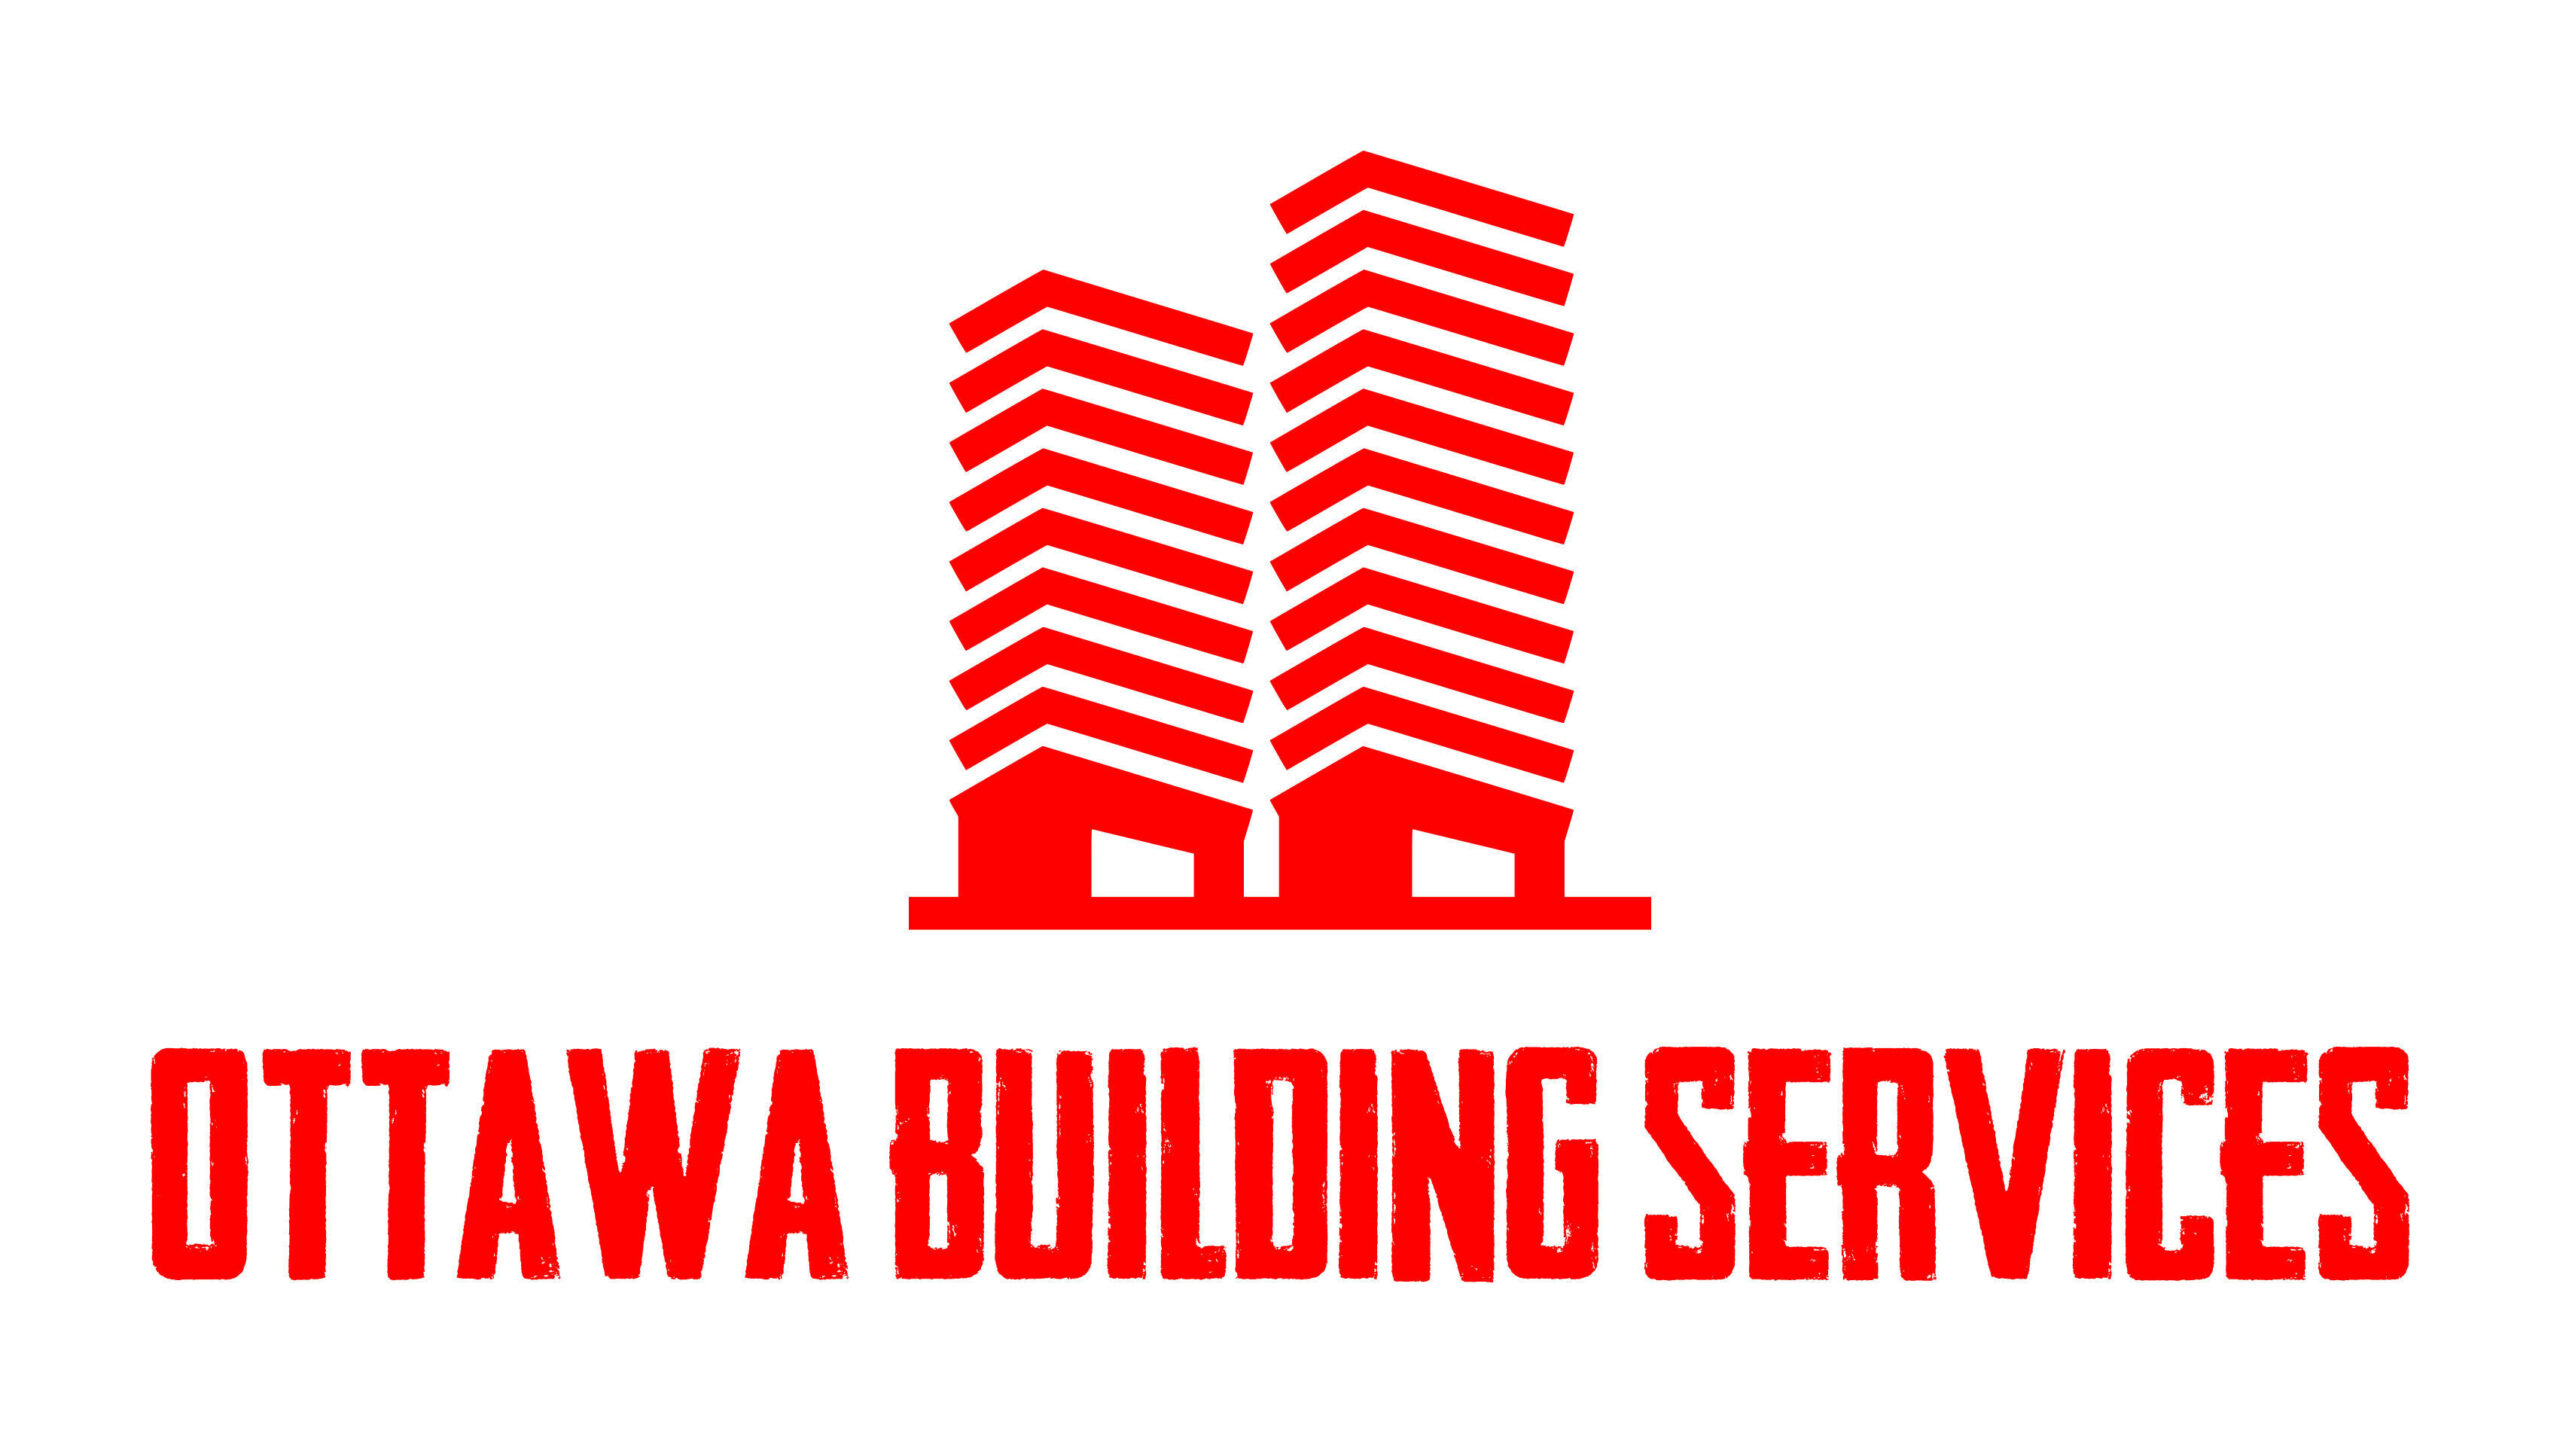 Ottawa Building Services